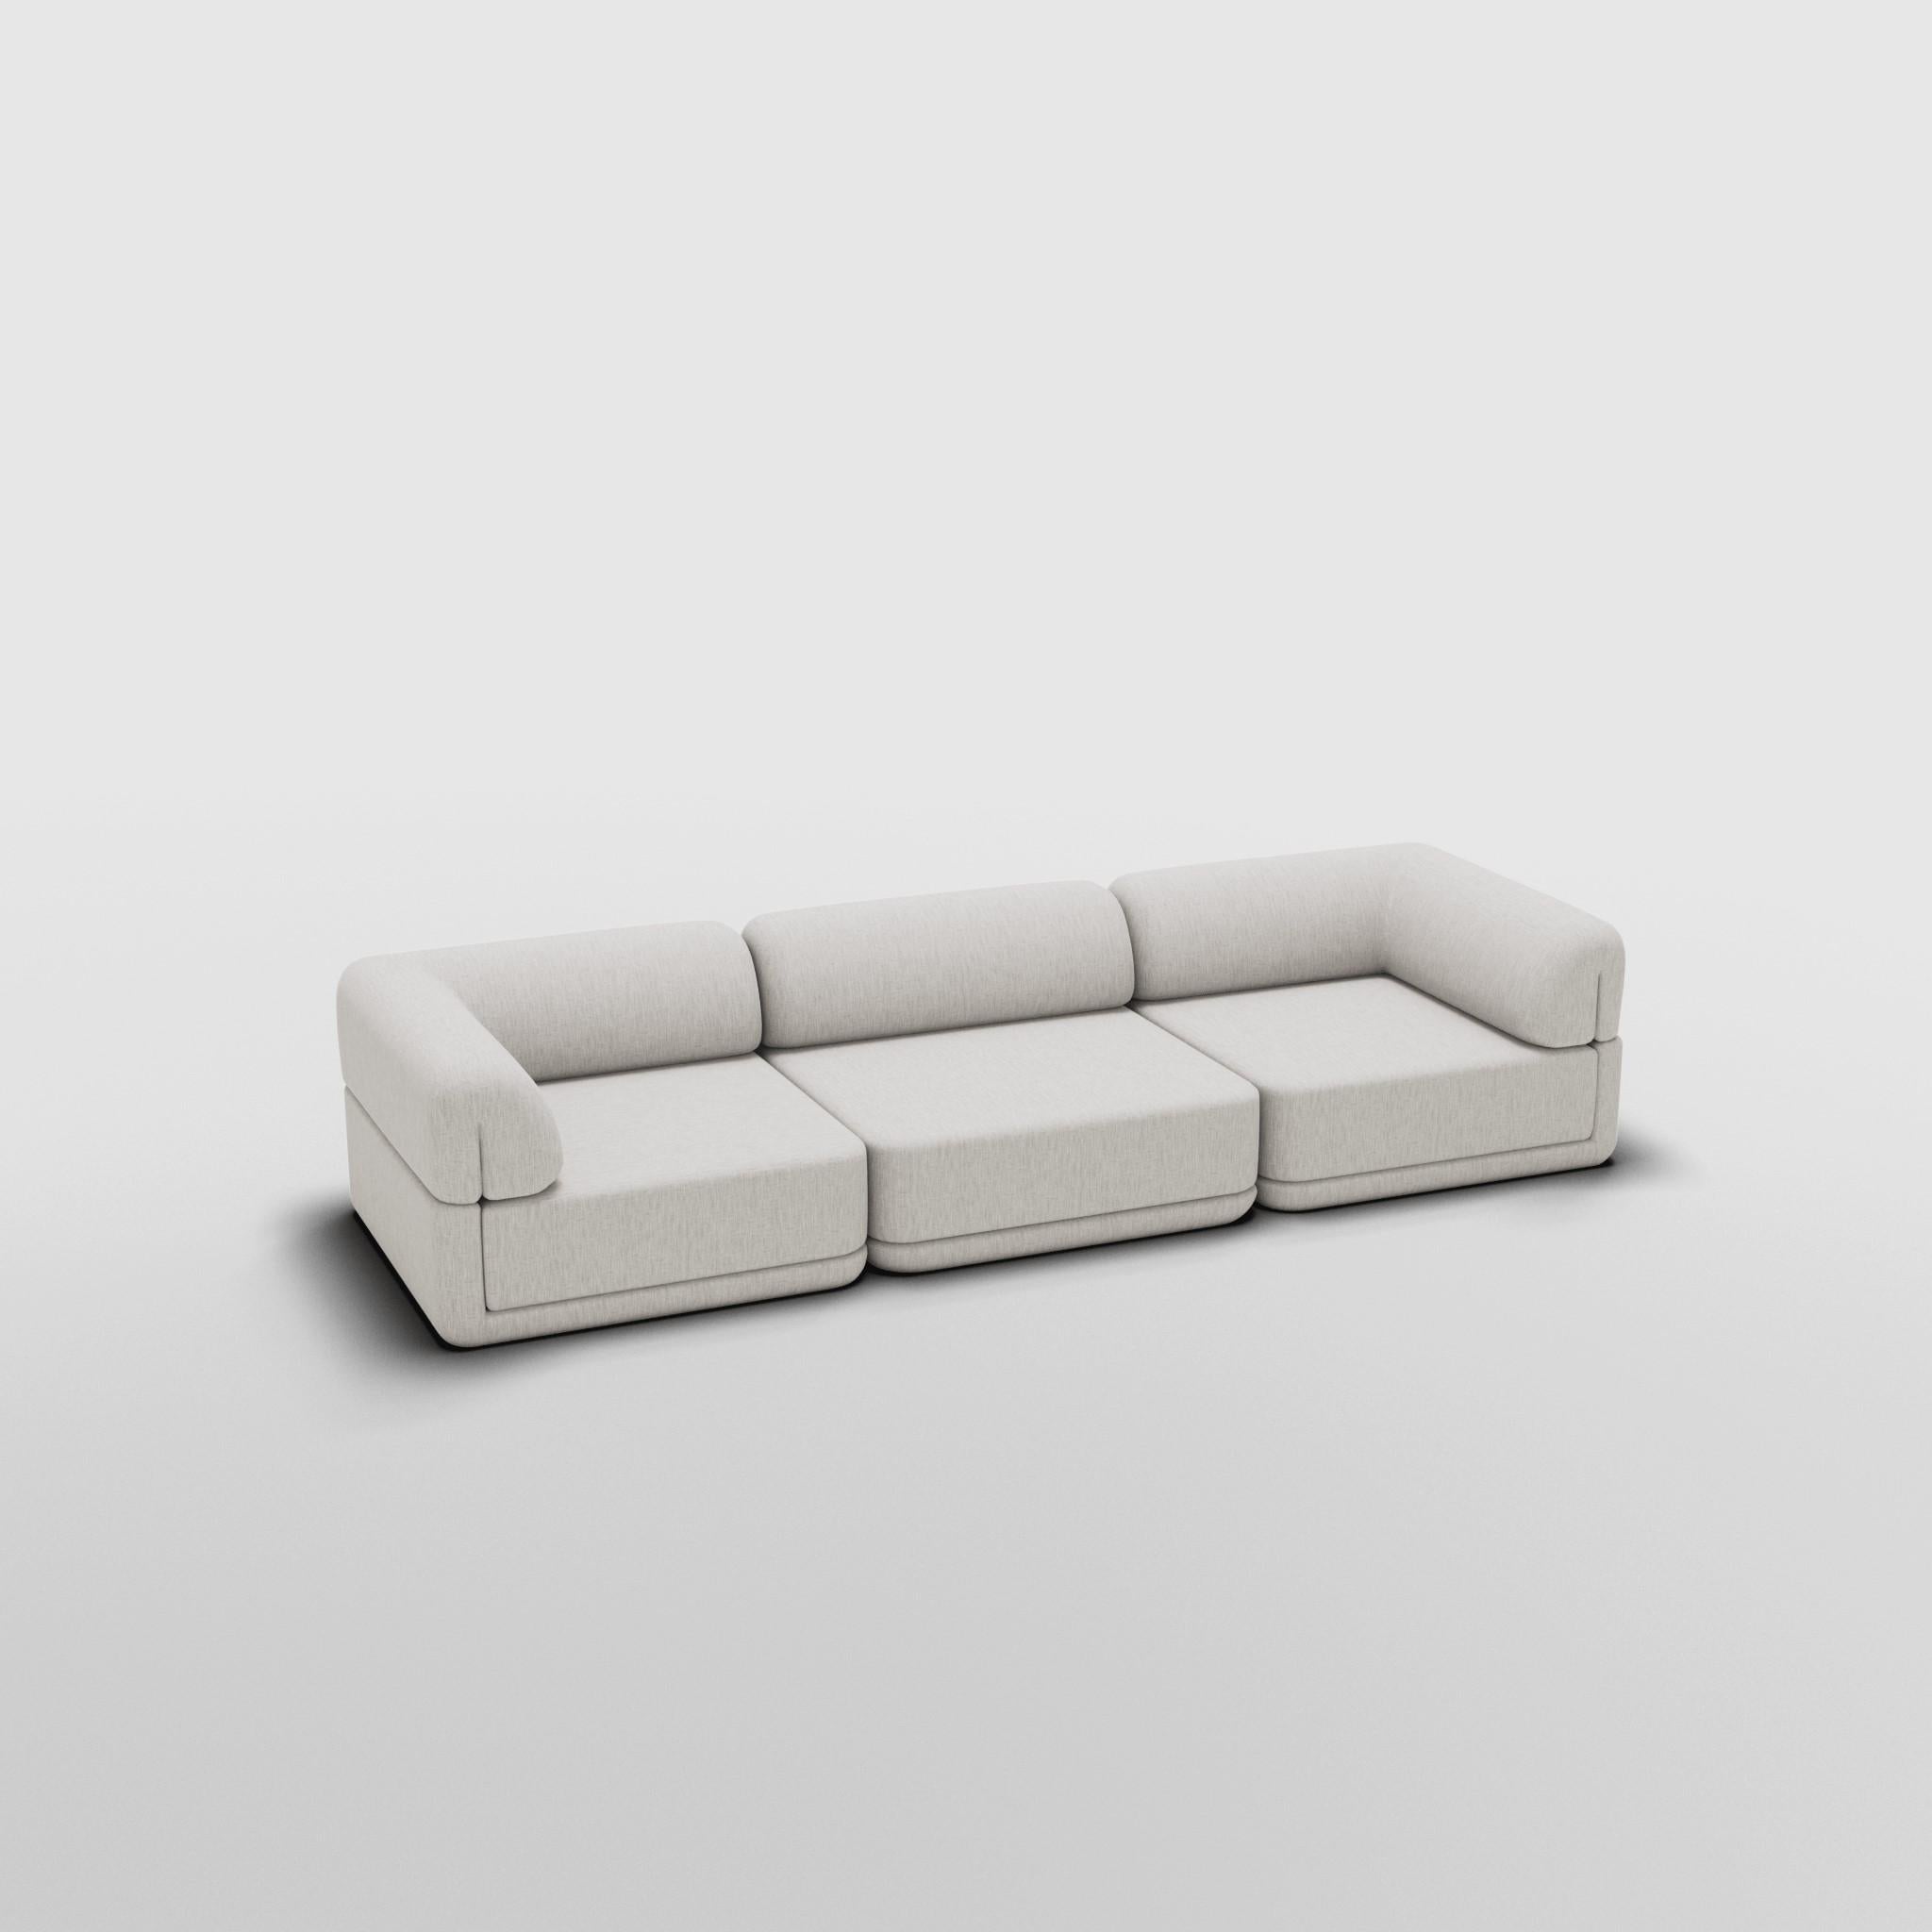 Mid-Century Modern The Cube Sofa - Sofa Lounge Set For Sale